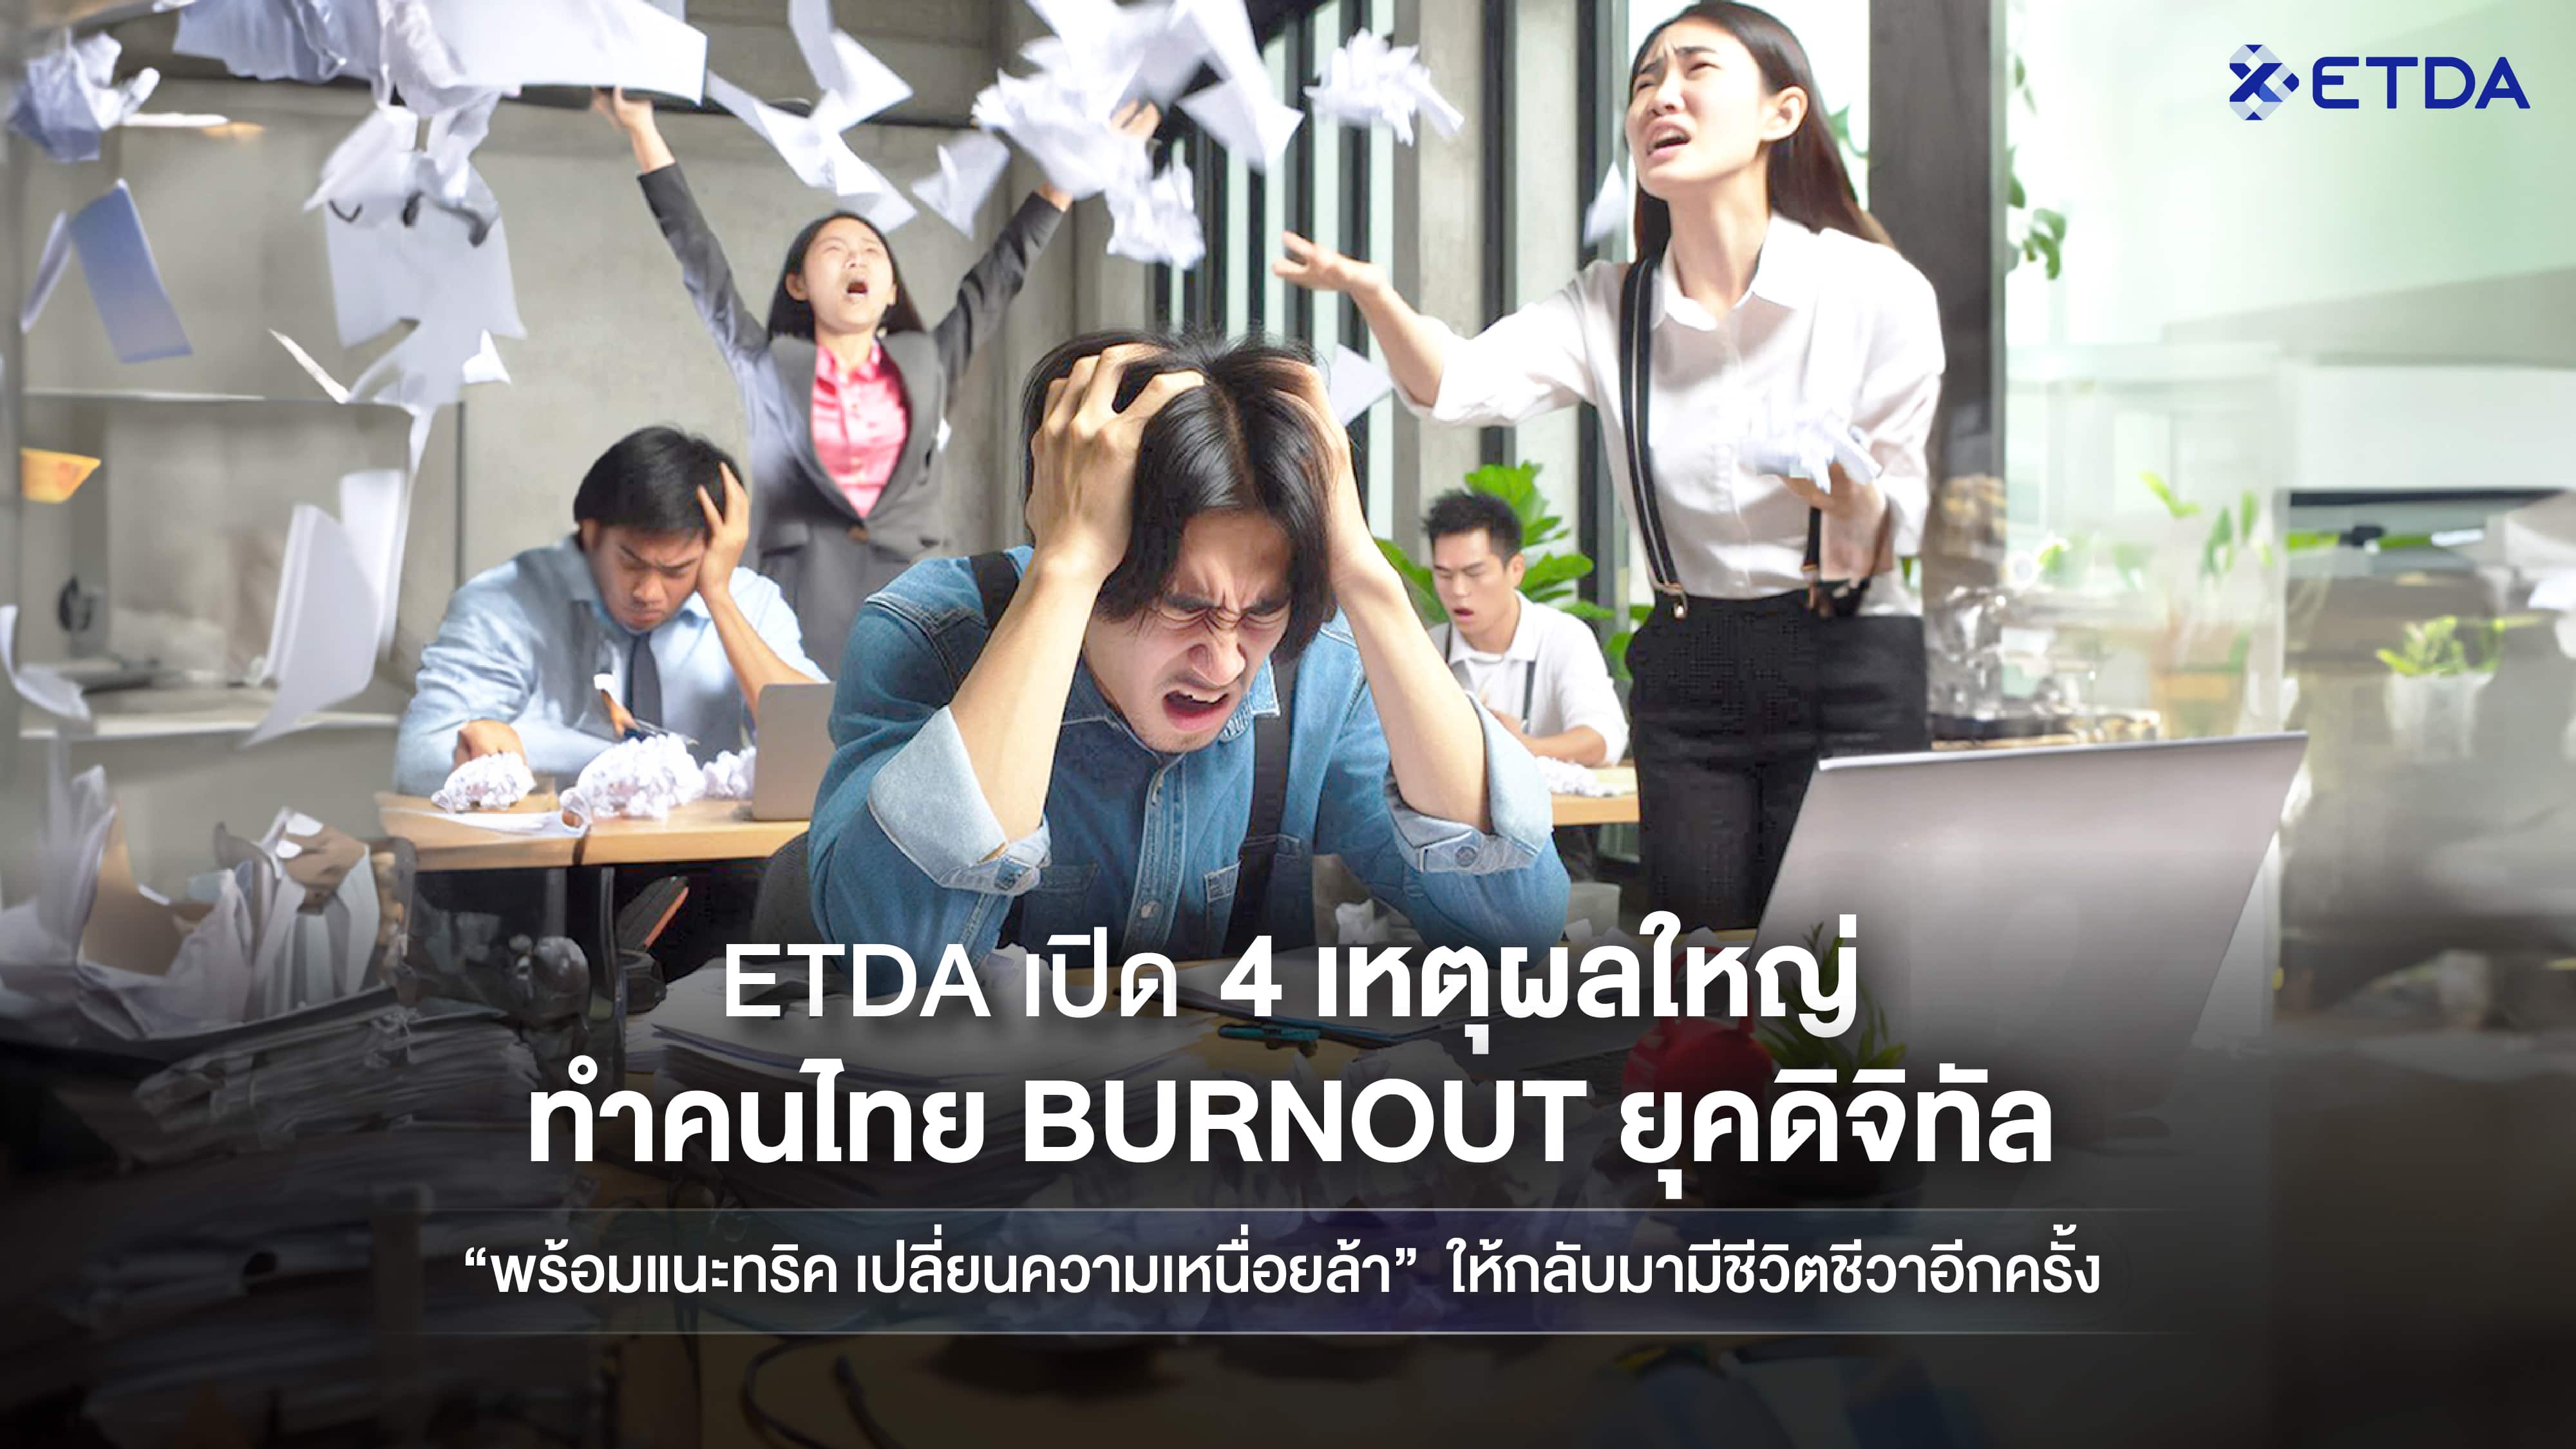 ETDA เปิด 4 เหตุผลใหญ่ ‘ทำคนไทย Burnout ยุคดิจิทัล’  พร้อมทริคเปลี่ยนความเหนื่อยล้า ให้กลับมามีชีวิตชีวาอีกครั้ง